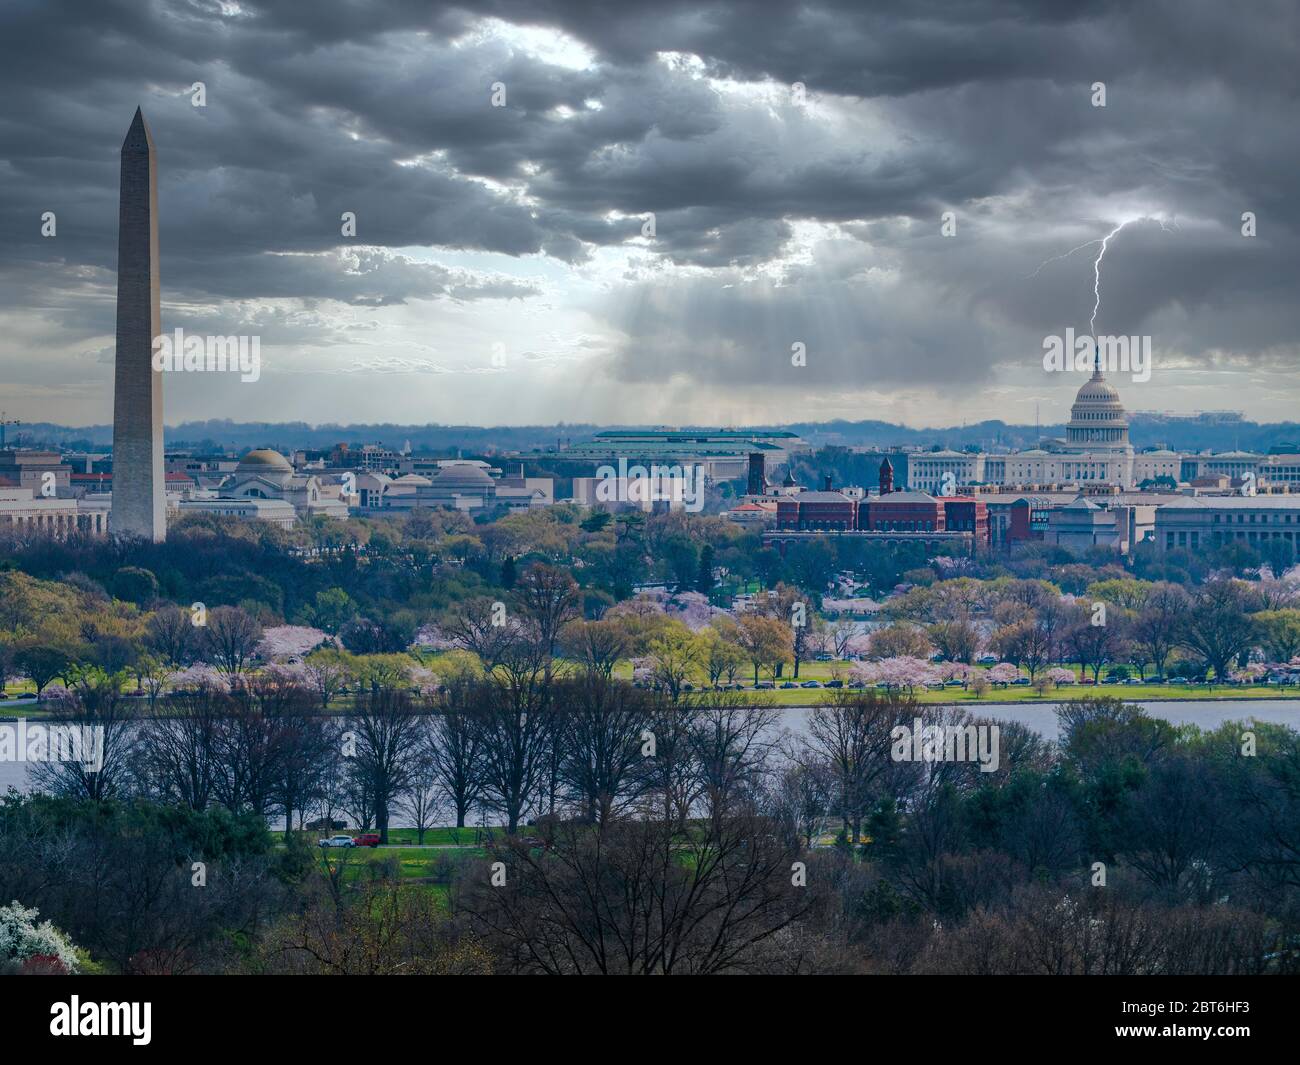 Lightning hitting the American Capitol building in Washington DC Stock Photo